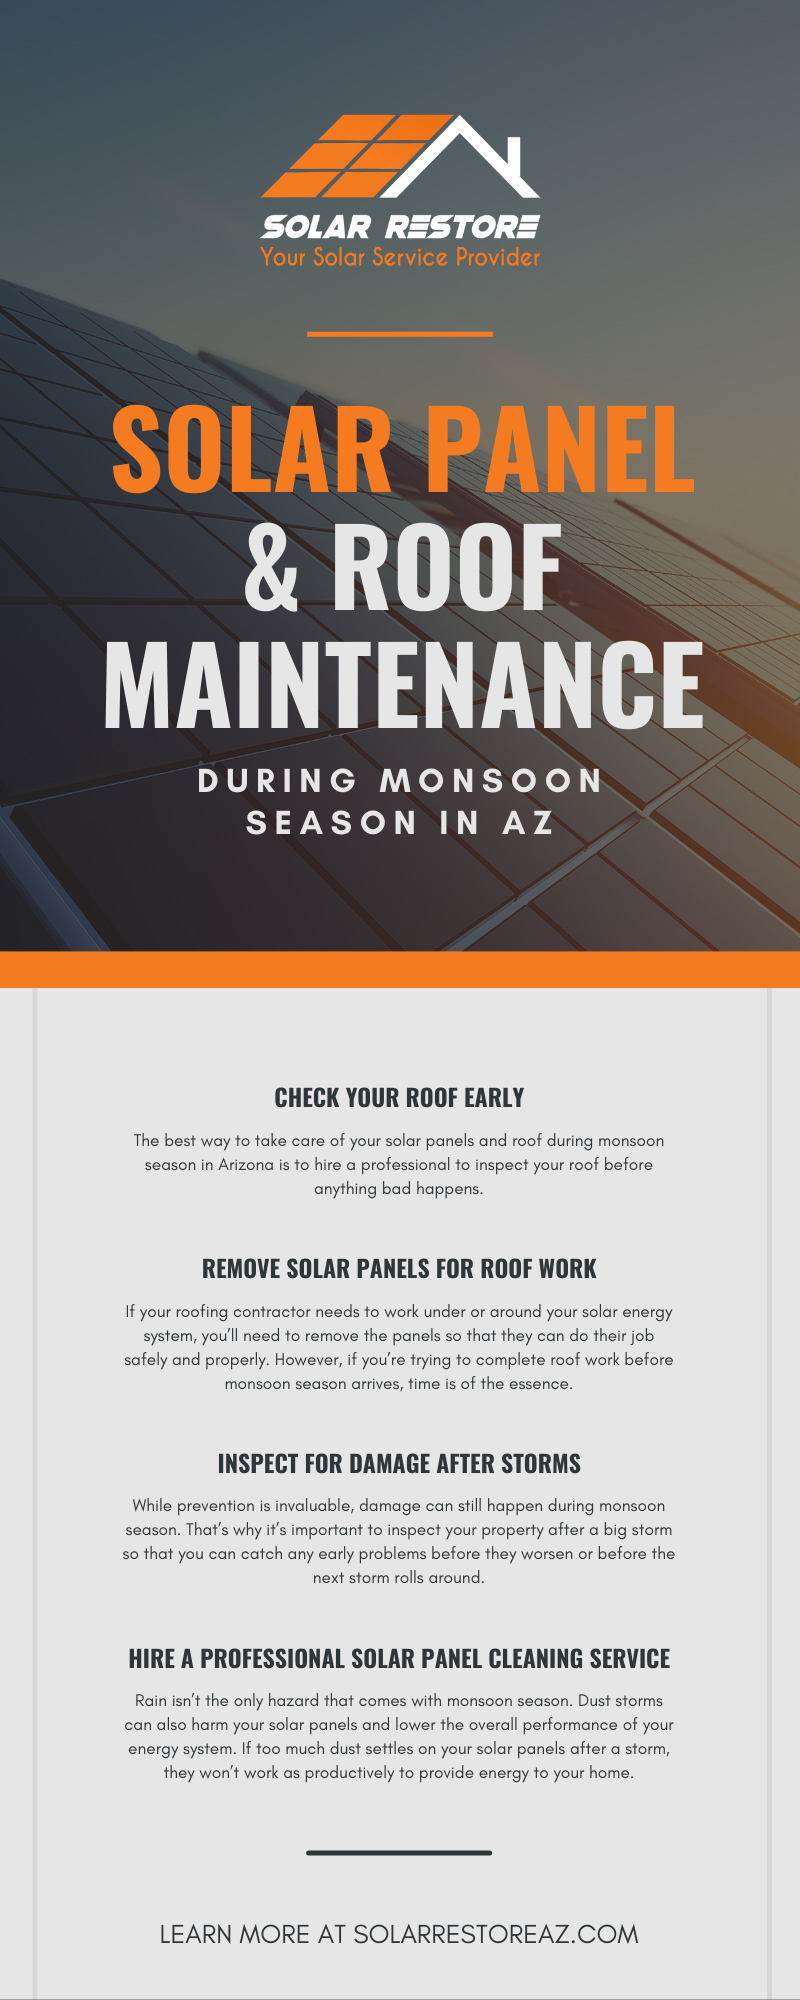 Solar Panel & Roof Maintenance During Monsoon Season in AZ